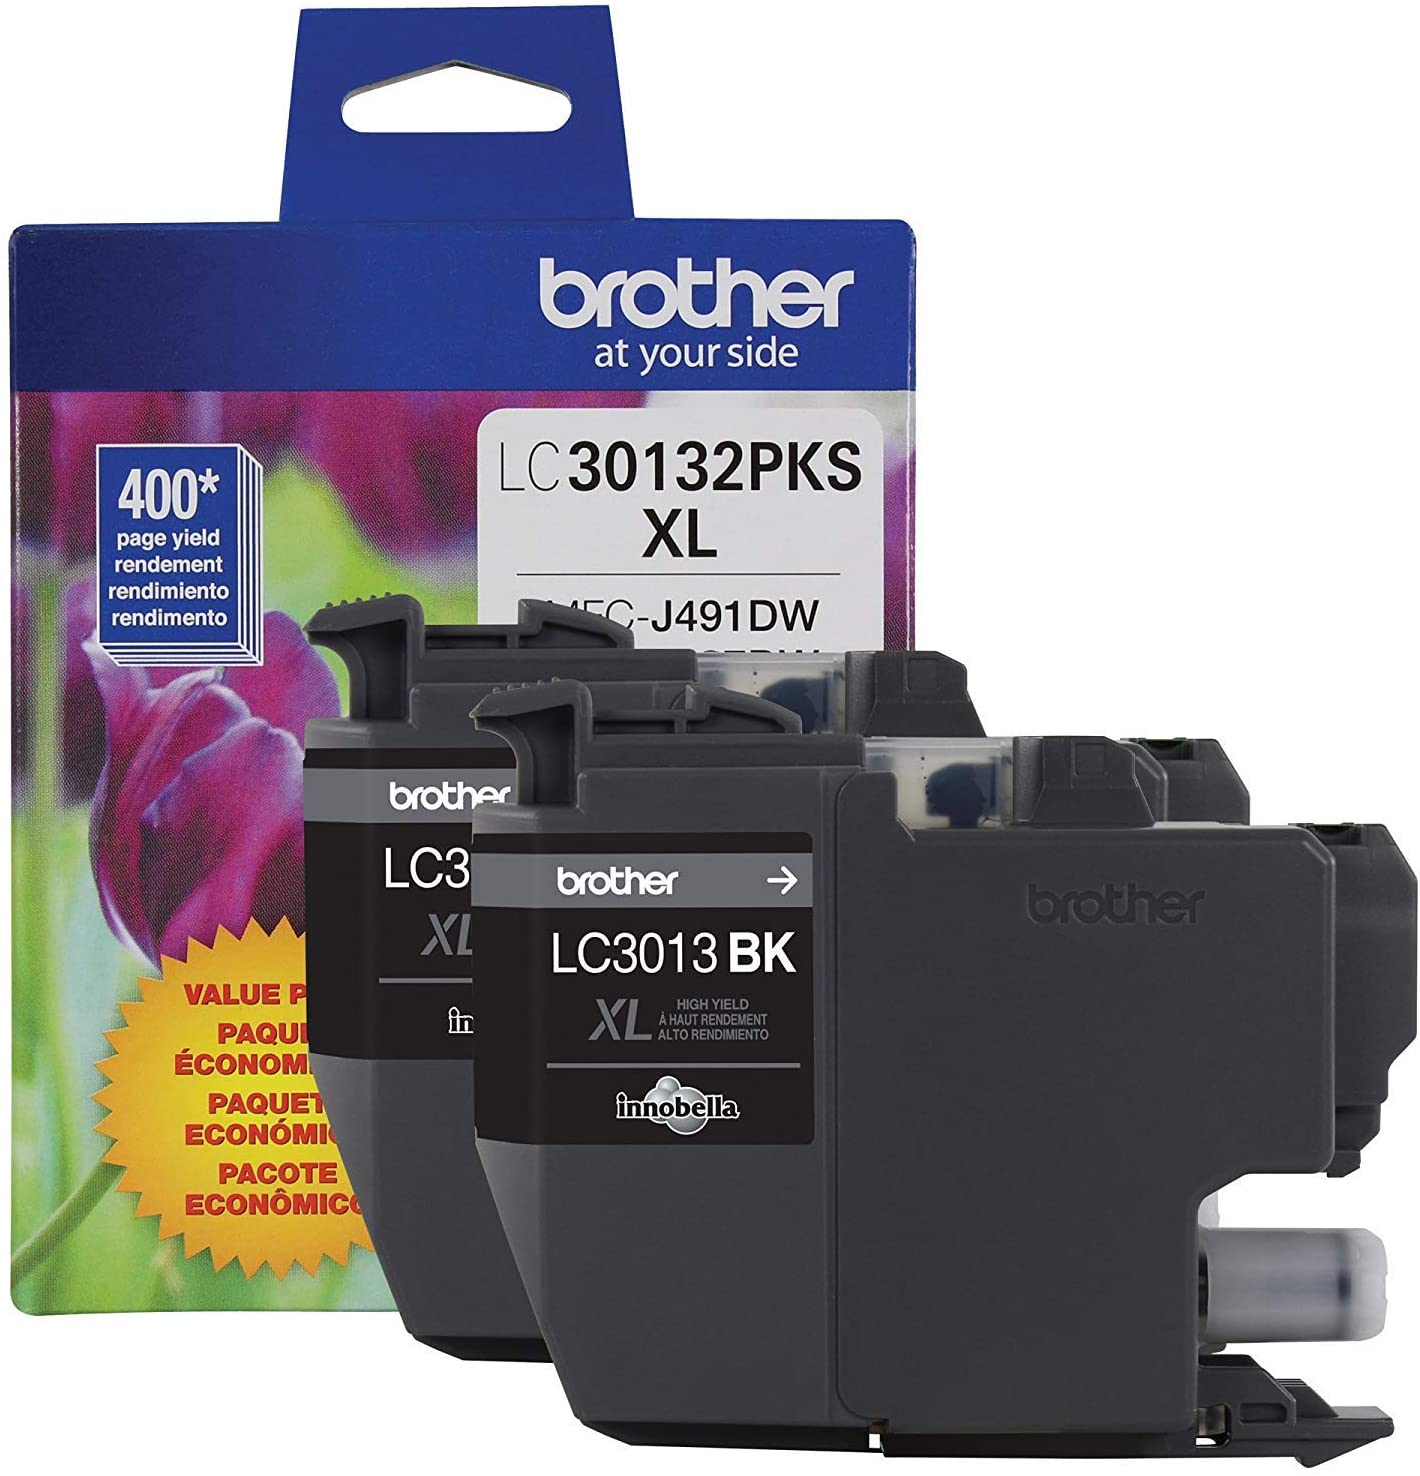 Absolute Toner Copy of Brother Genuine OEM LC103BKS High Yield Black Ink Cartridge Original Brother Cartridges